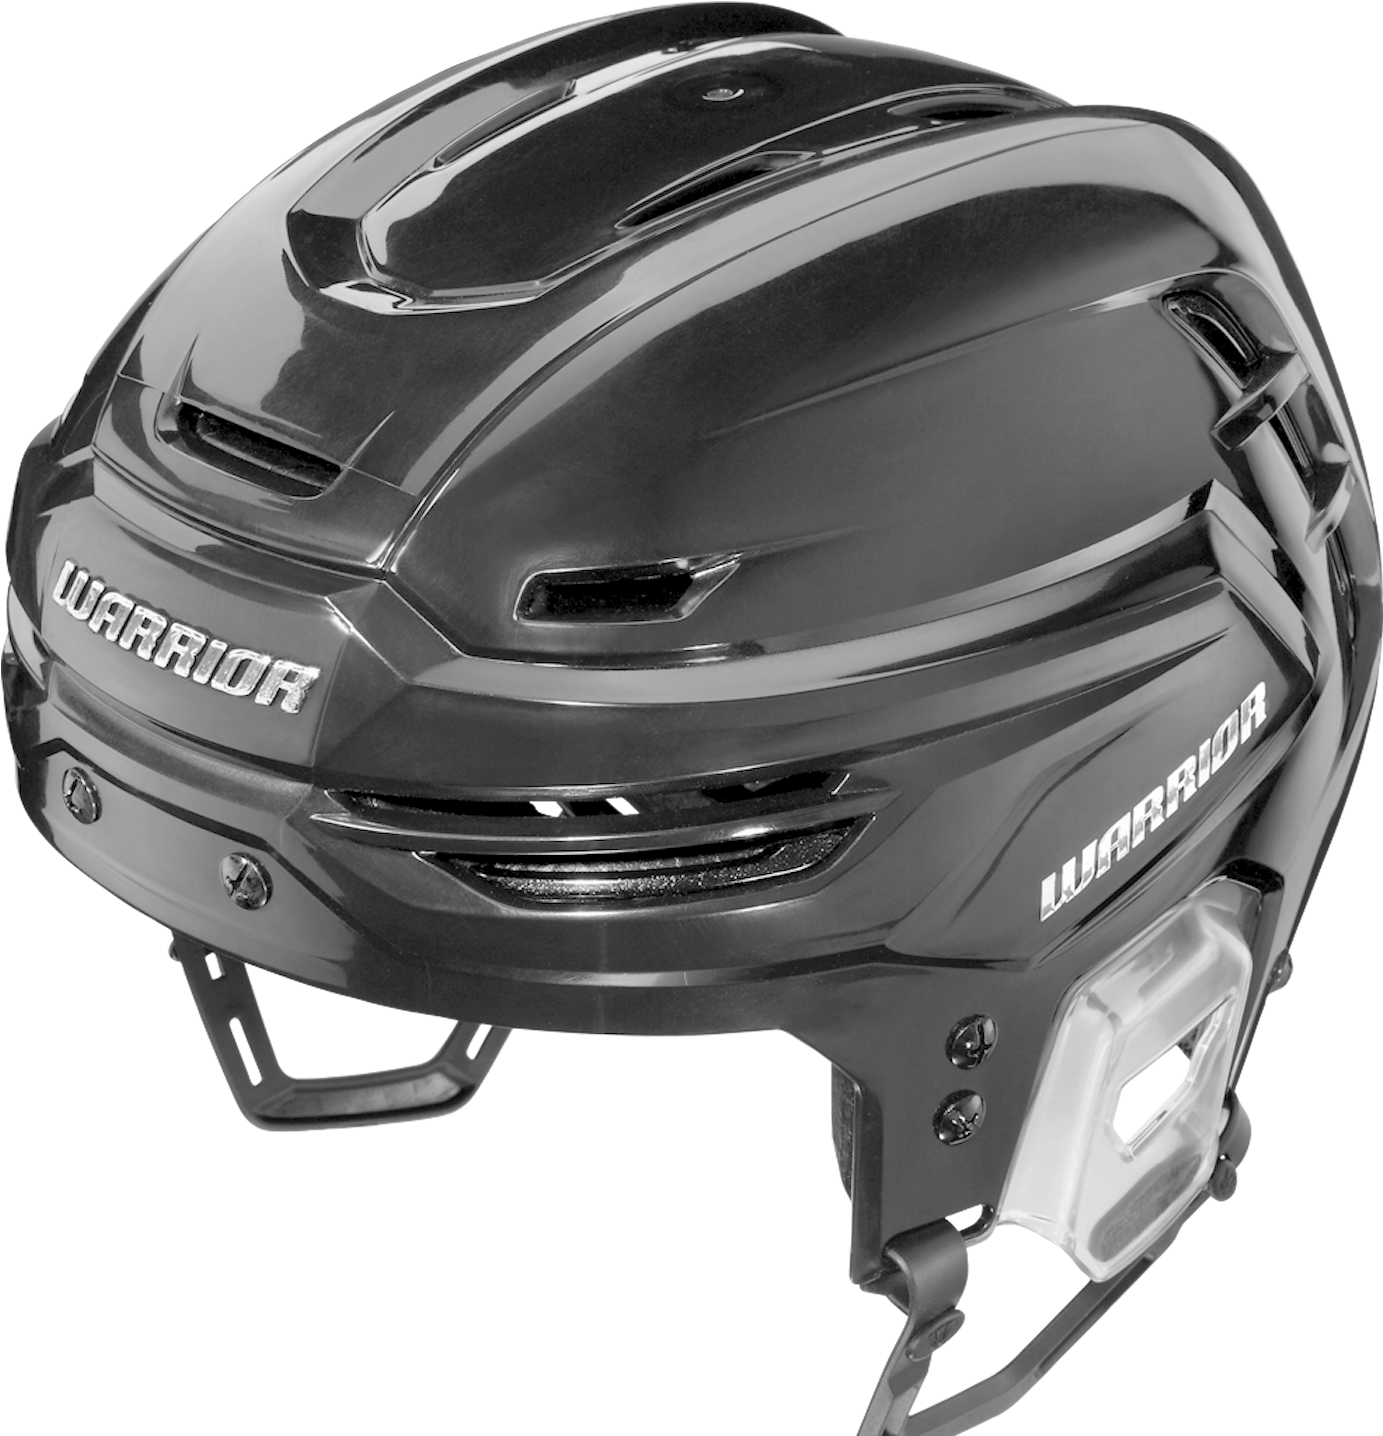 A Black Hockey Helmet With White Text